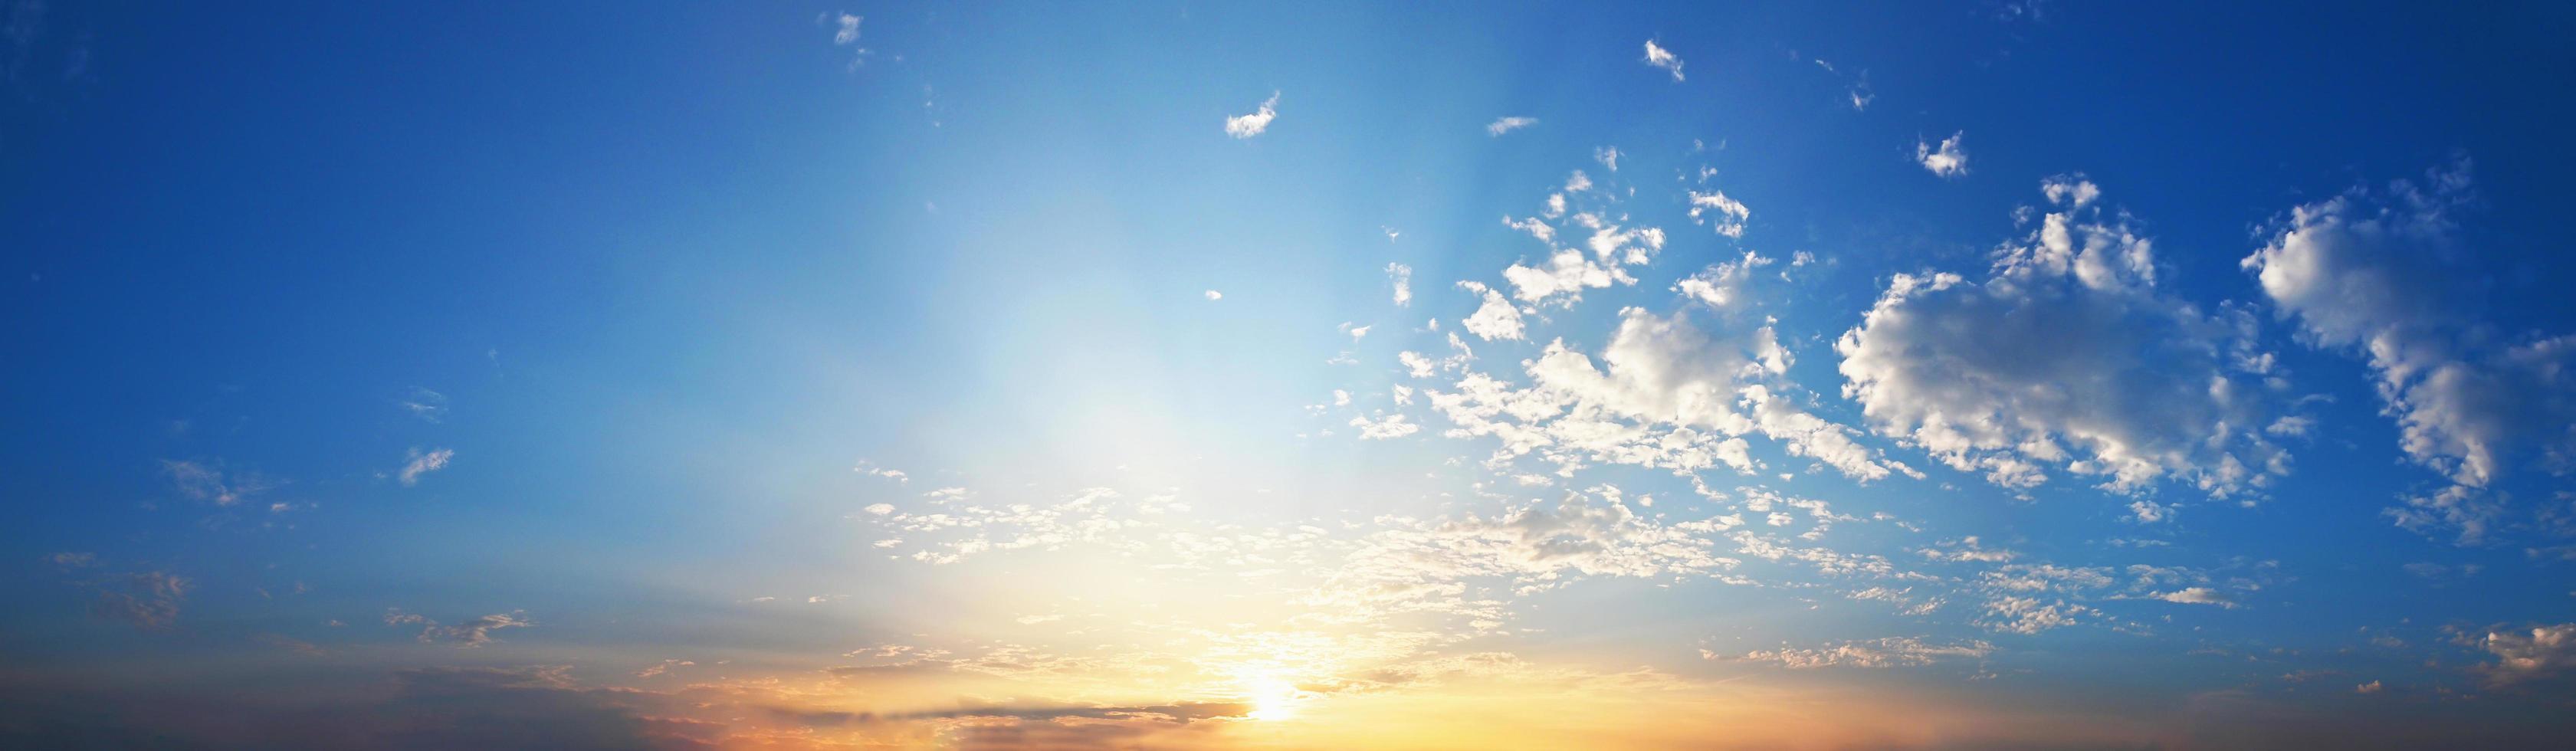 panorama blå himmel med solnedgång foto